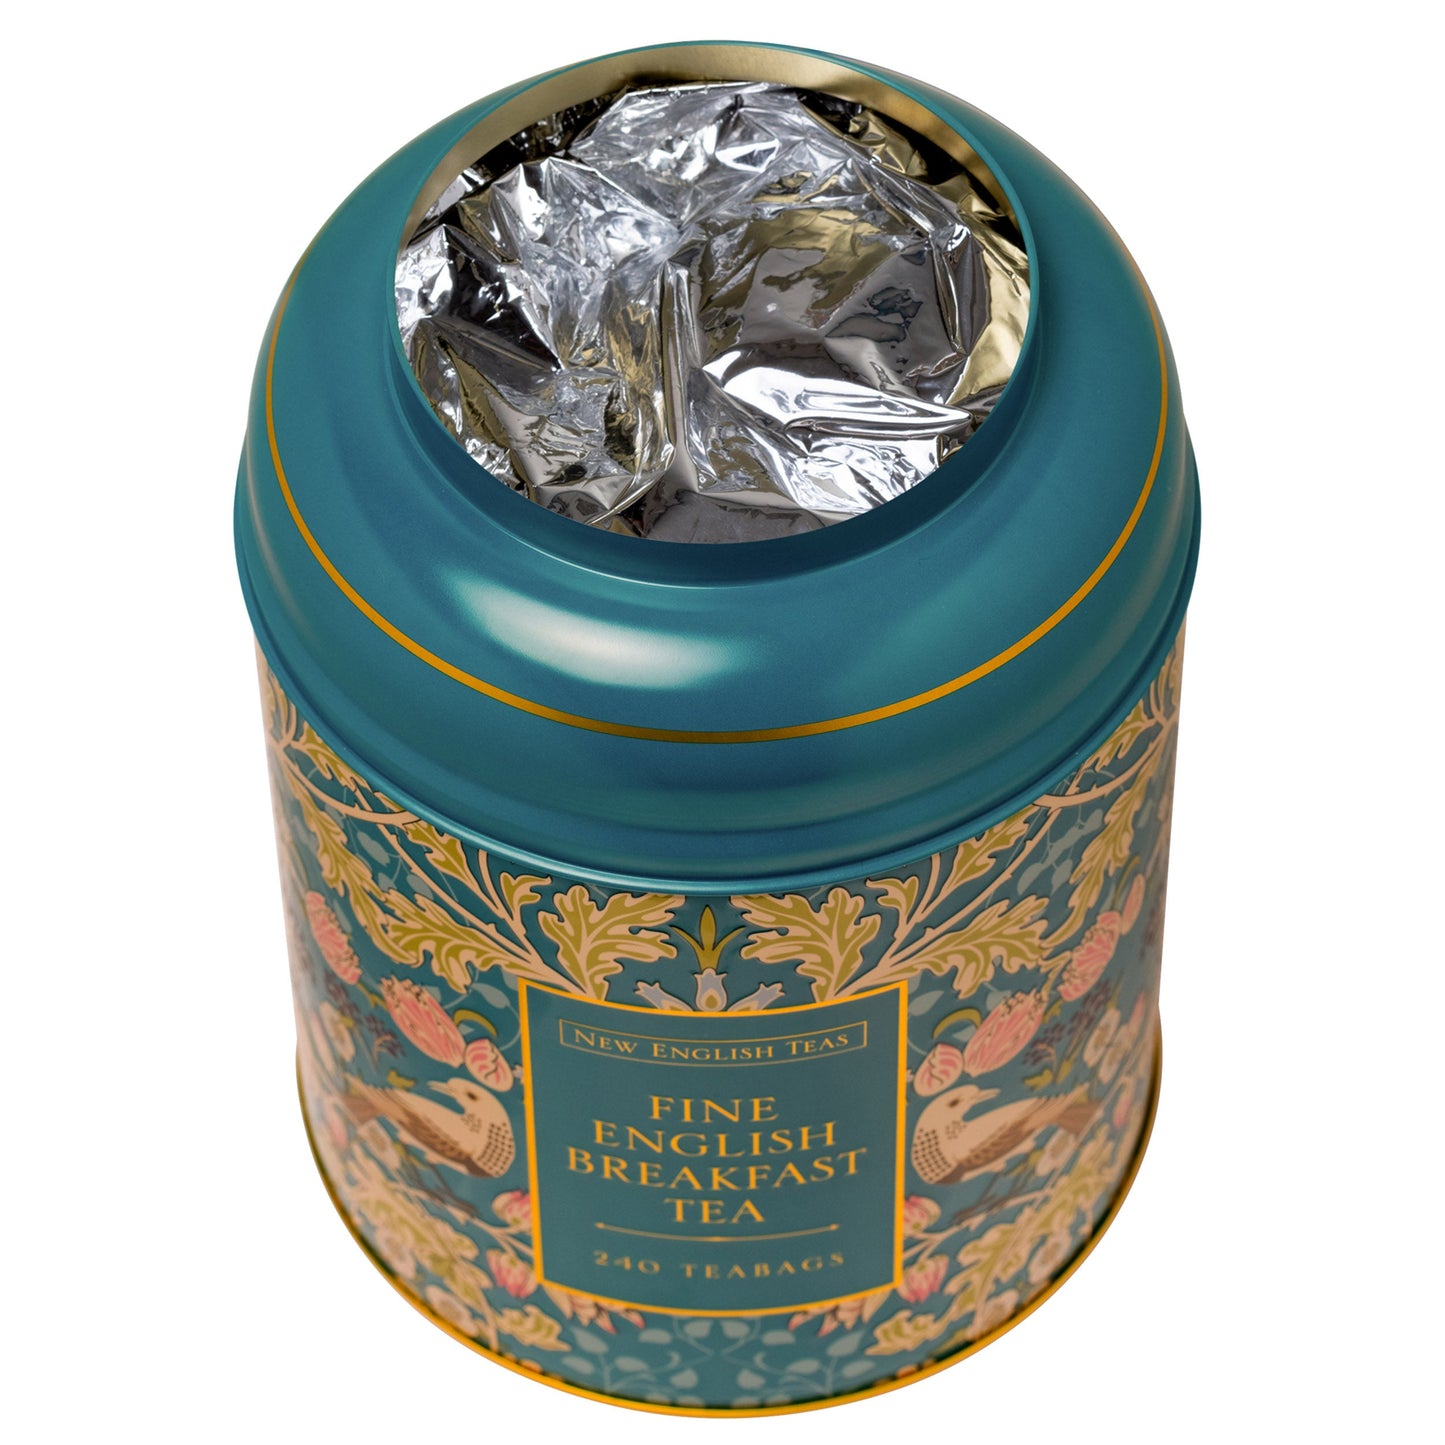 Teal Song Thrush & Berries Tea Caddy With 240 English Breakfast Teabags Tea Tins New English Teas 